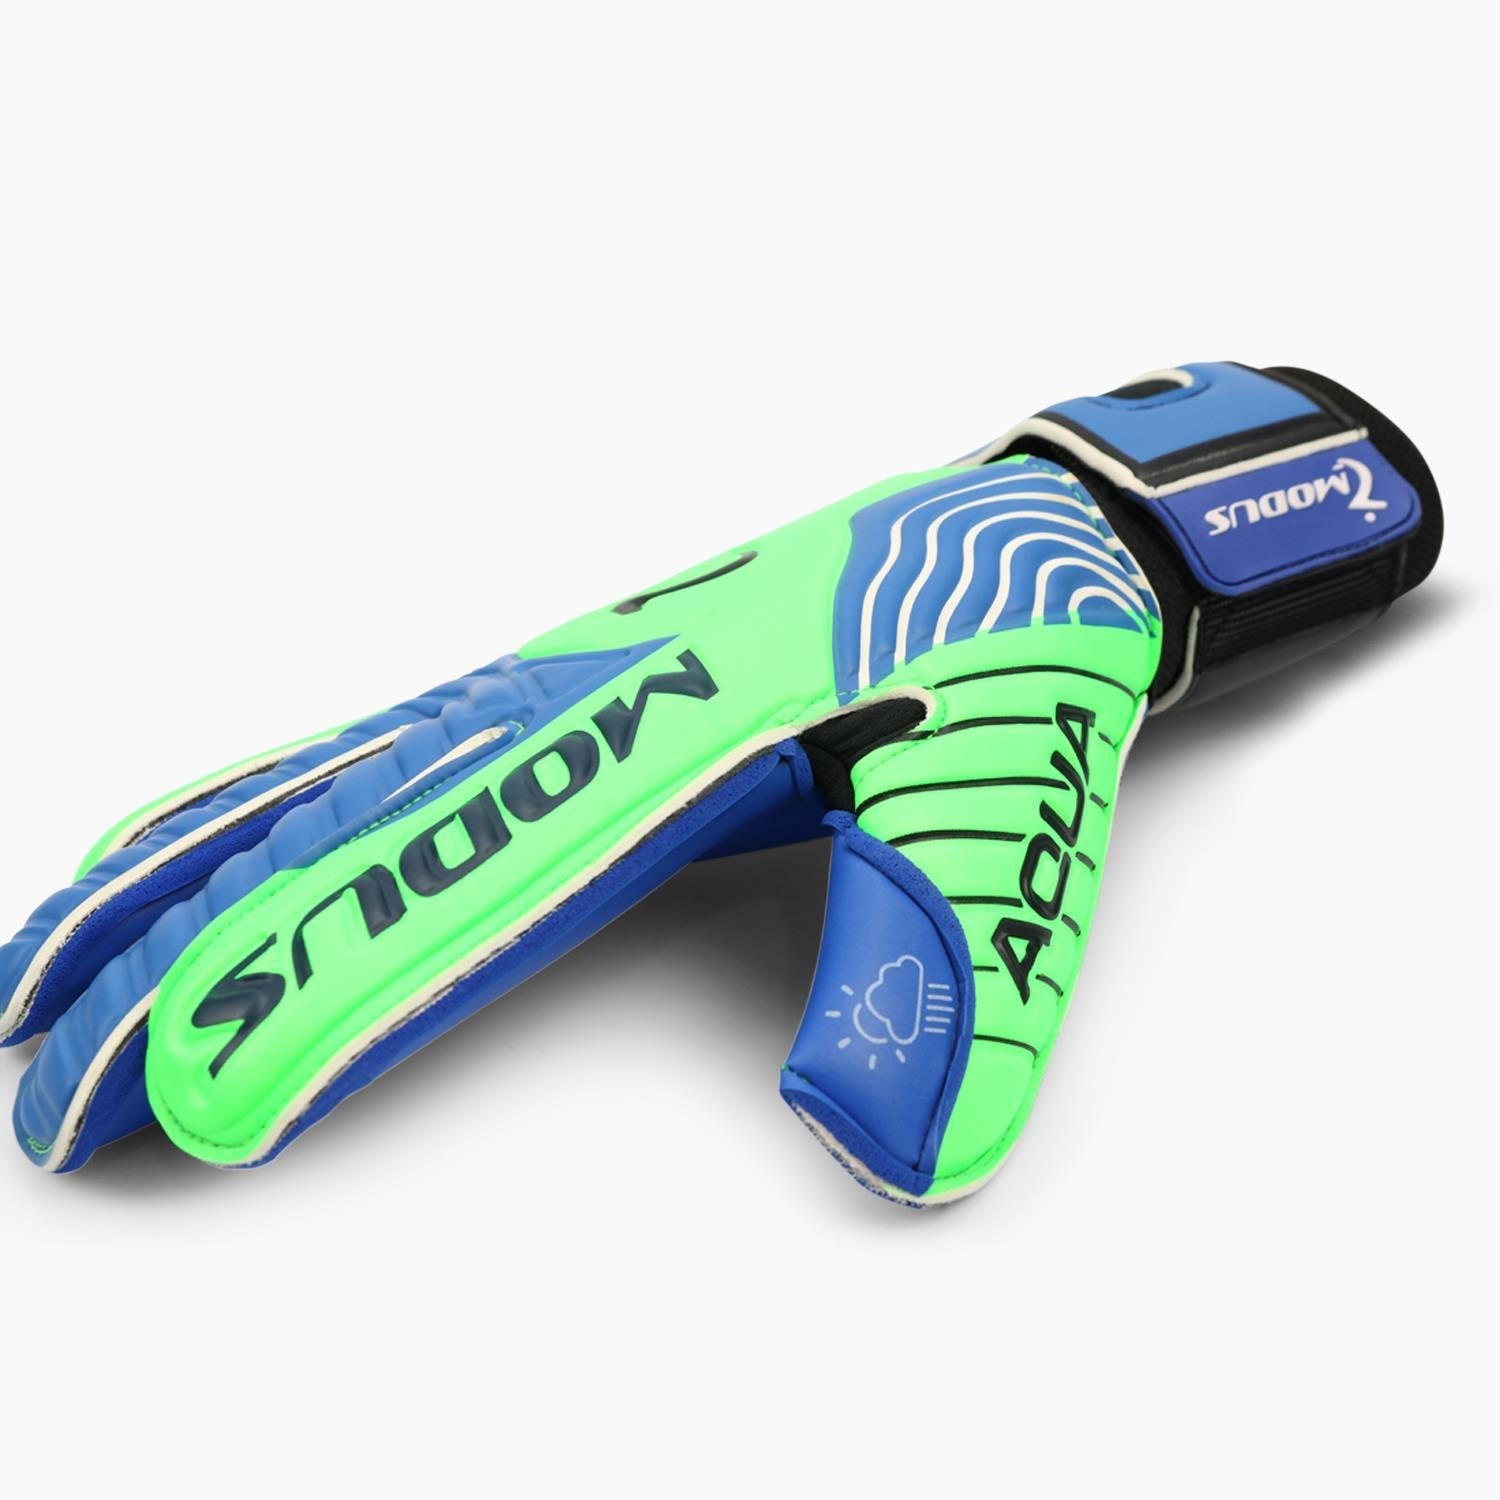 Buy Modus Aqua Goalkeeper Gloves-Football Gloves-Modus-Splay UK Online